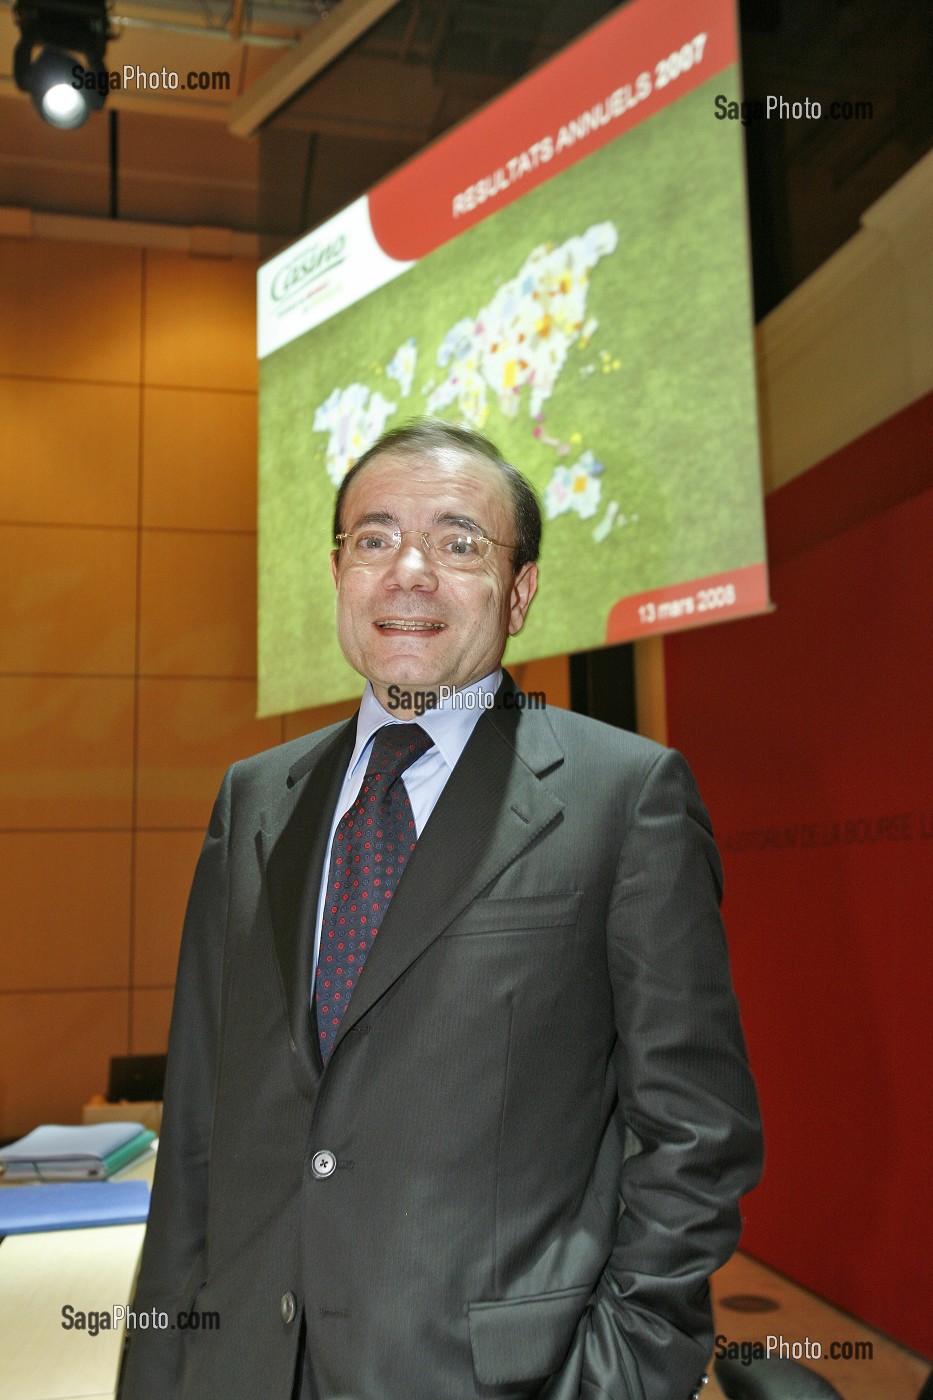 JEAN CHARLES NAOURI, PDG DU GROUPE CASINO, PRESENTATION DES RESULTATS ANNUELS 2007 